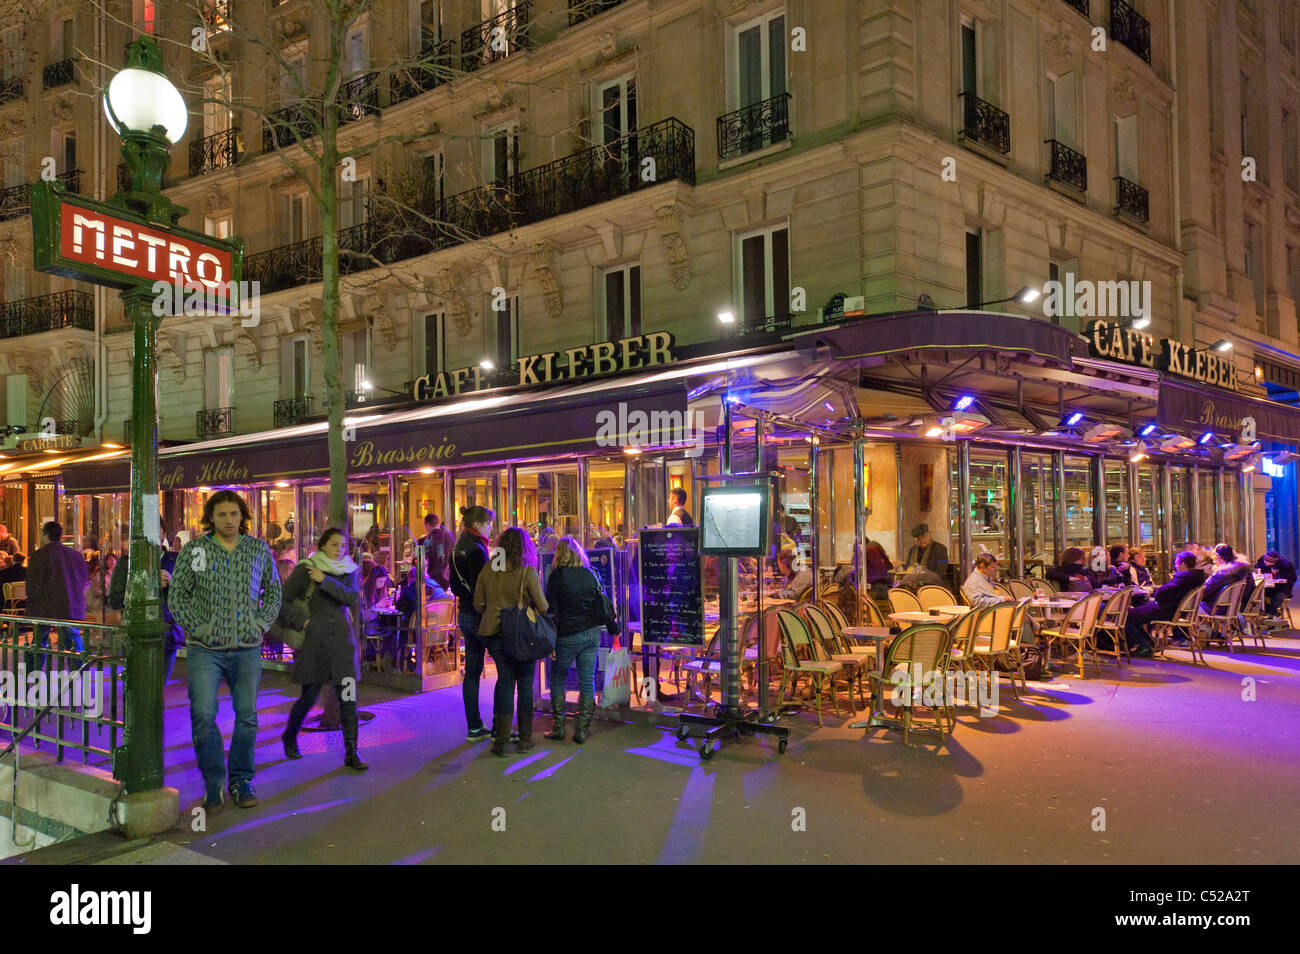 Trocadero Café Kleber und Metro-station Paris Frankreich Stockfotografie -  Alamy